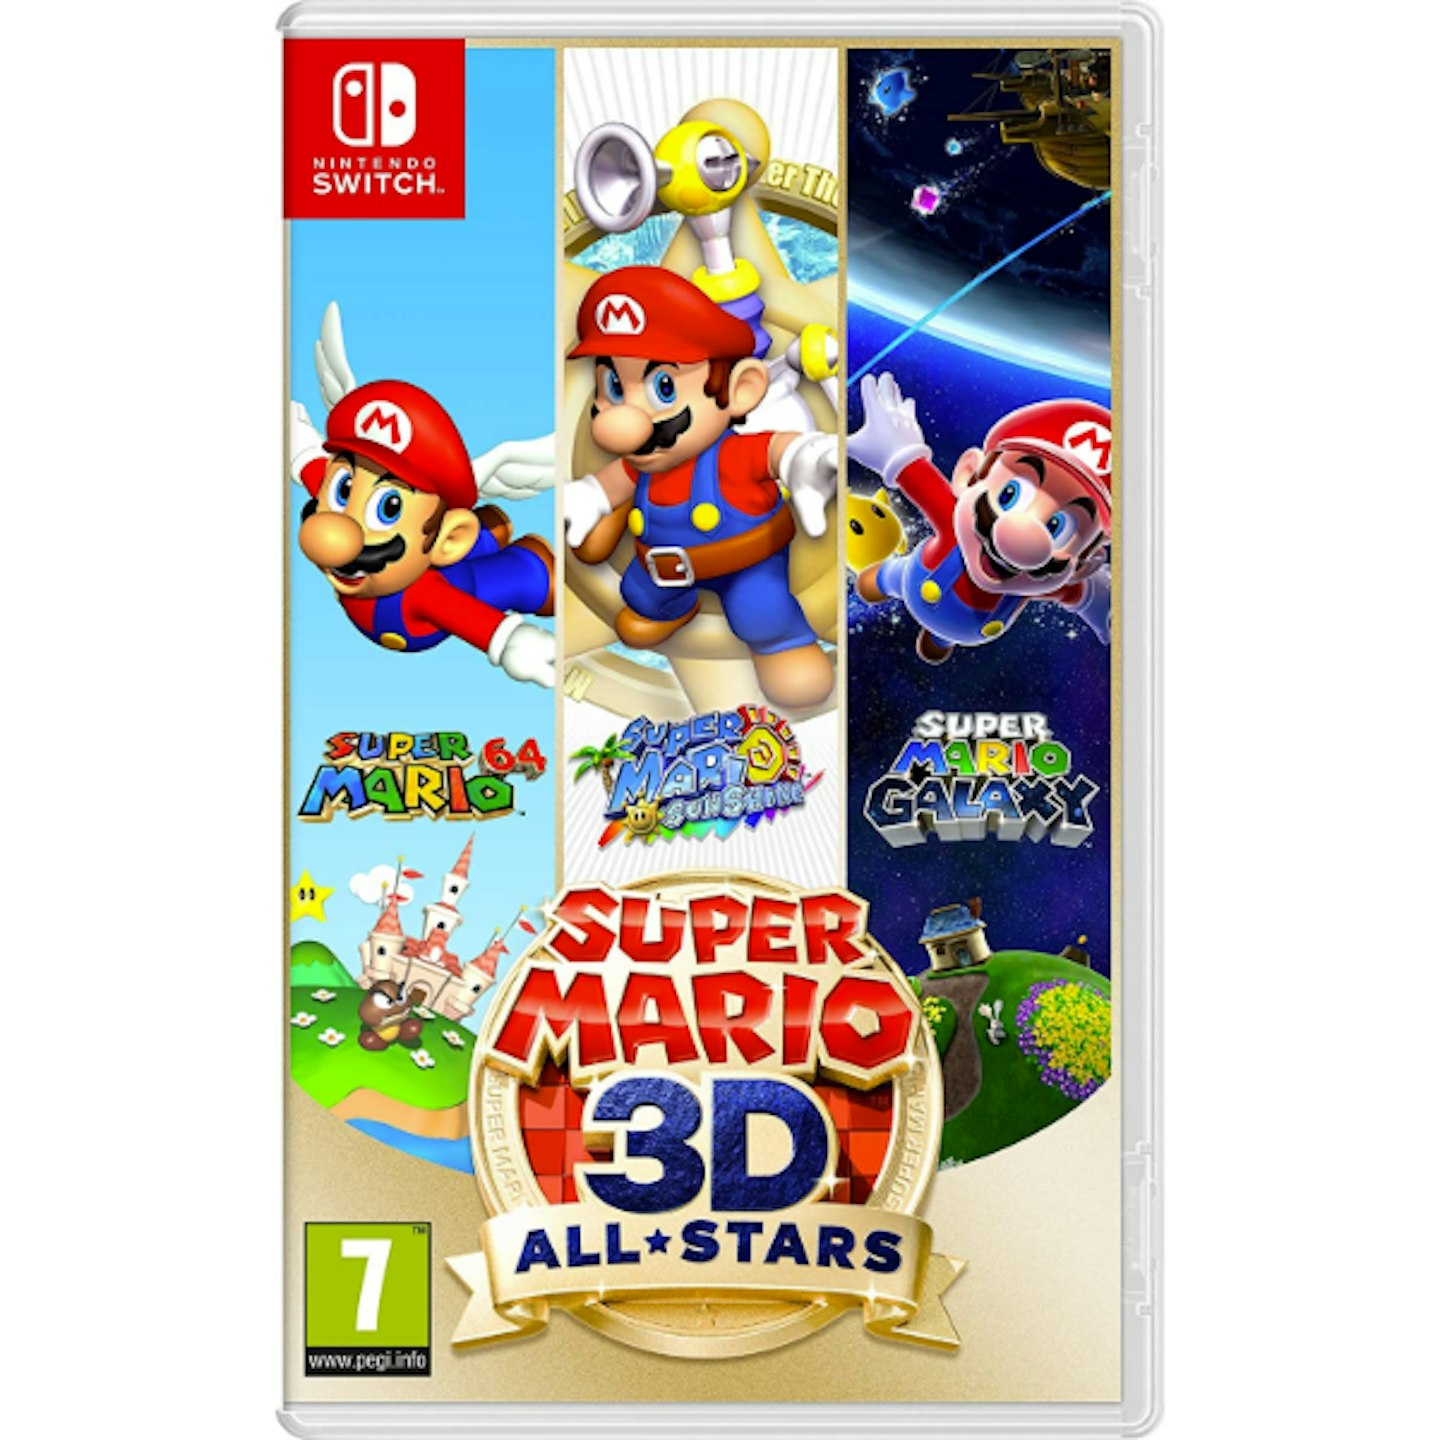 Super Mario 3D All-Stars - Physical Edition